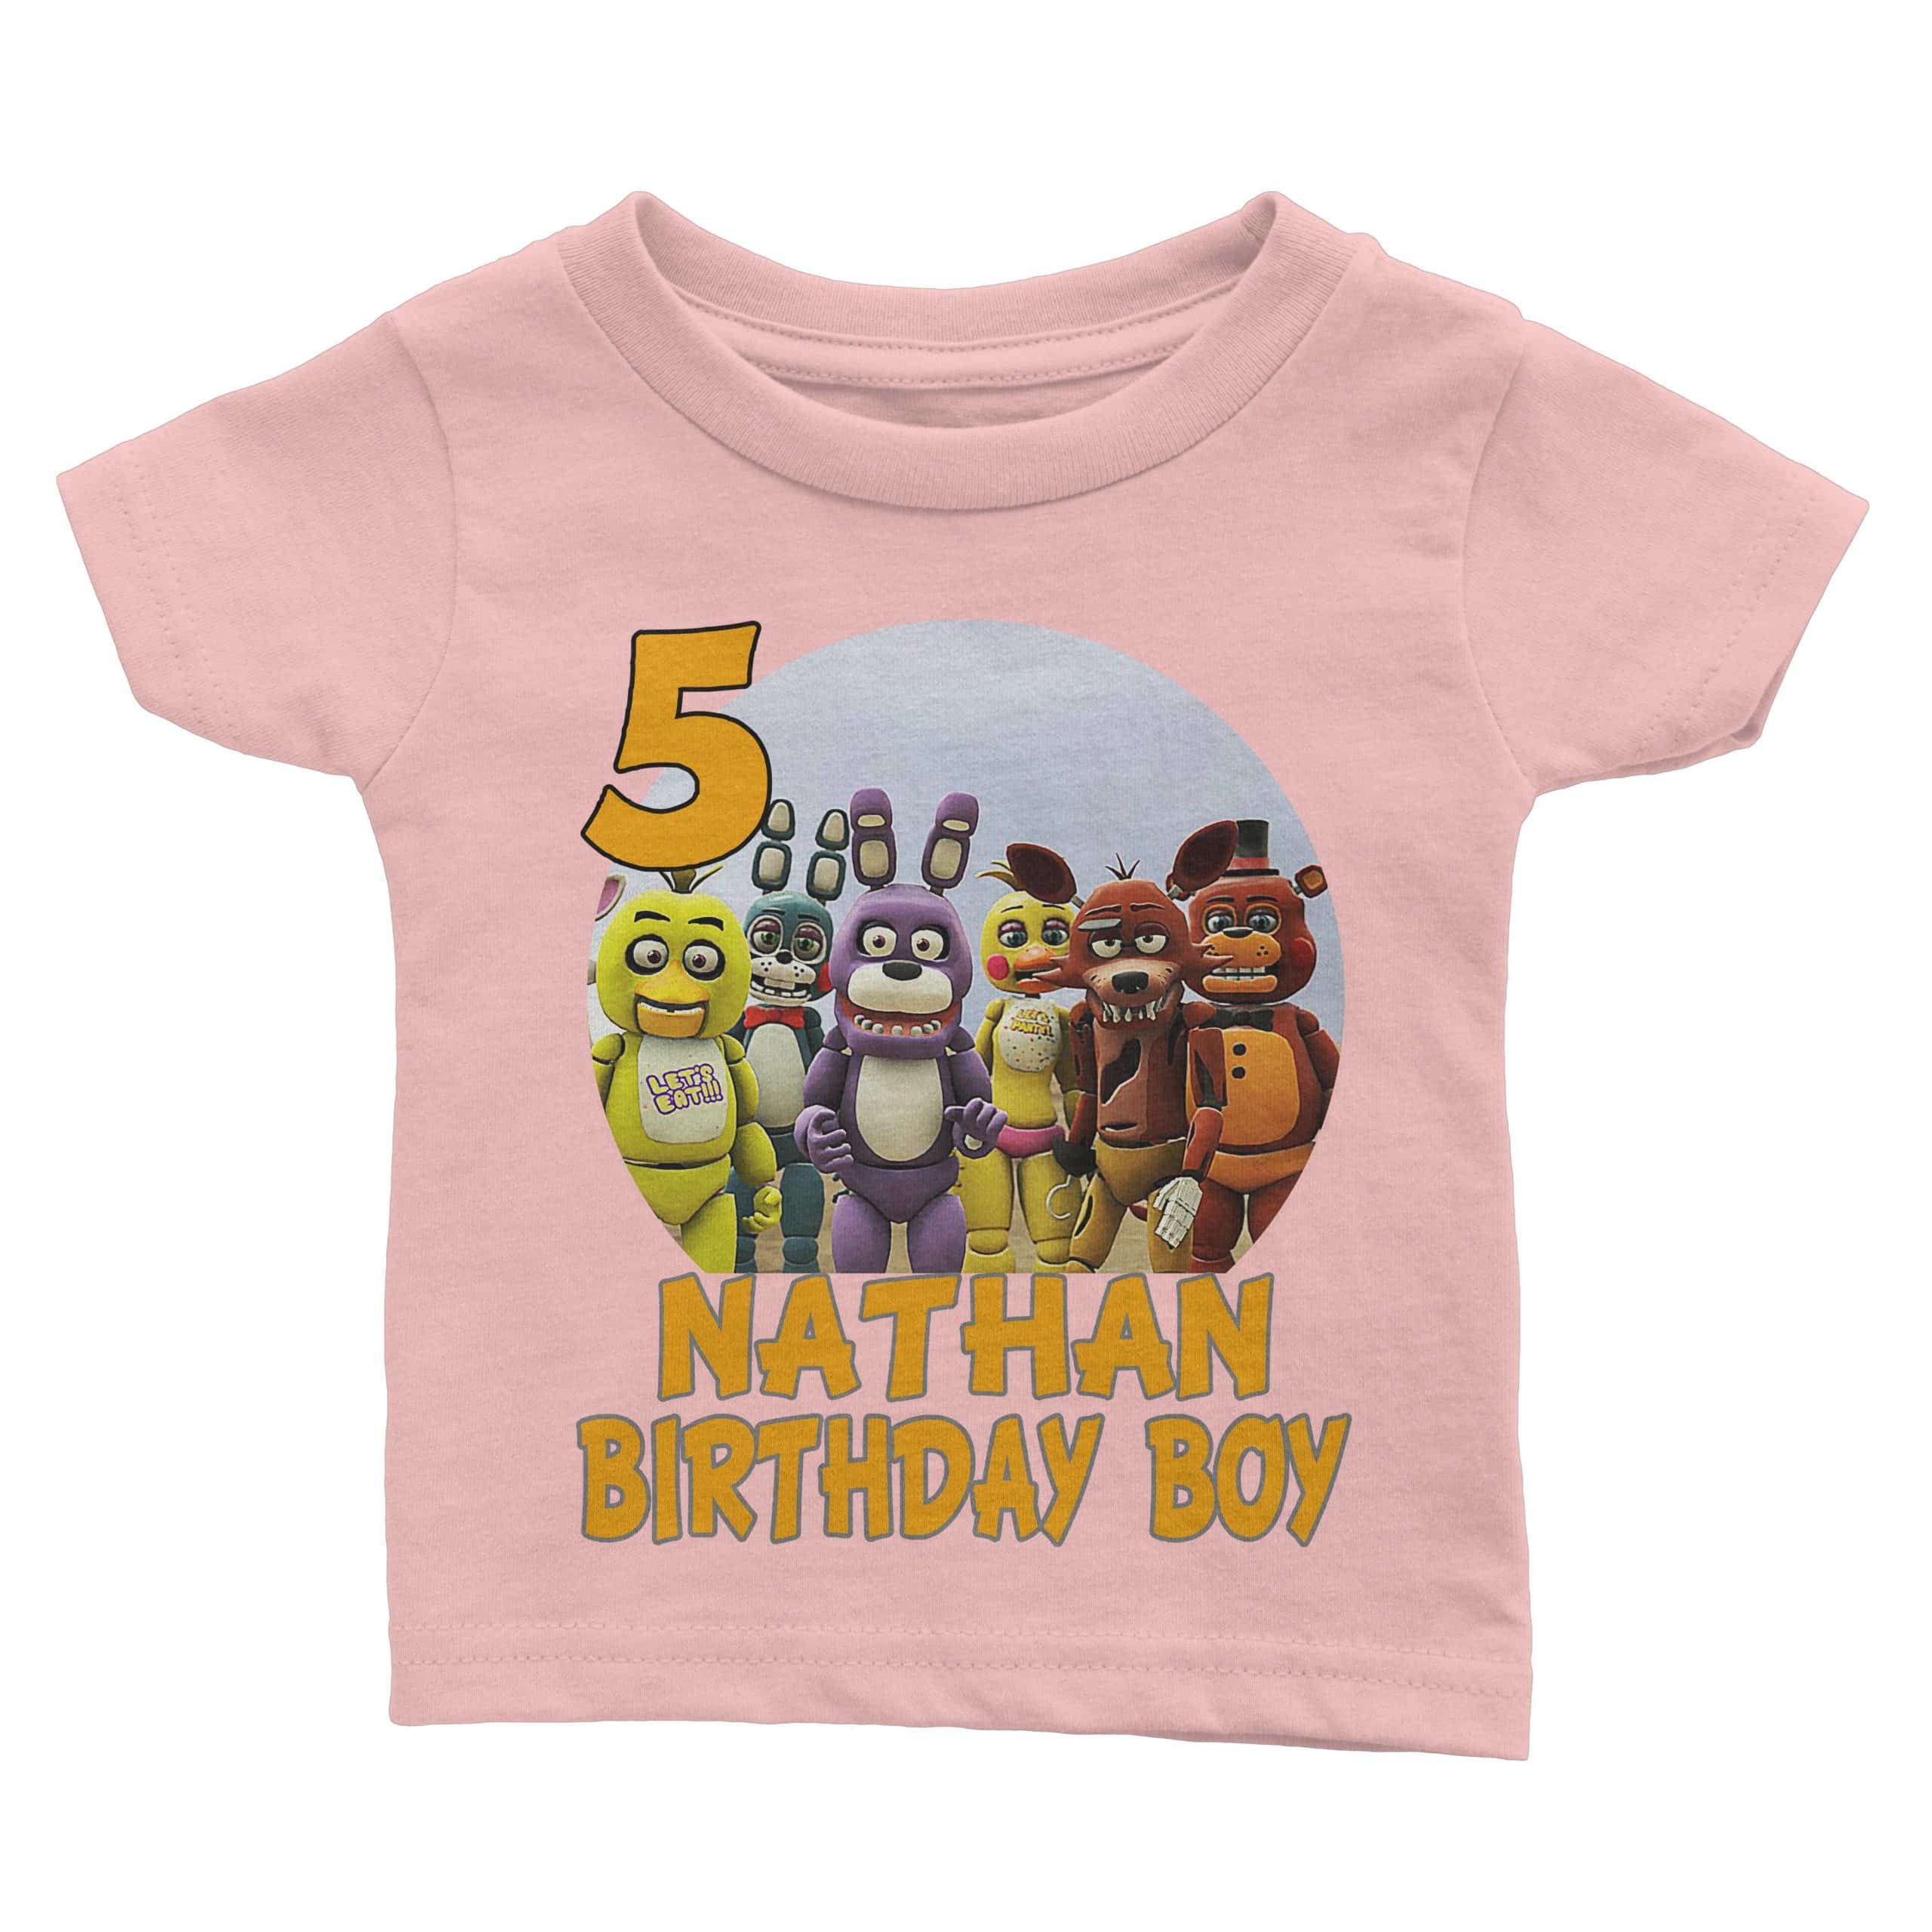 Five Nights at Freddy's (FNAF) T-Shirt Birthday Image - FNAF Party Supplies